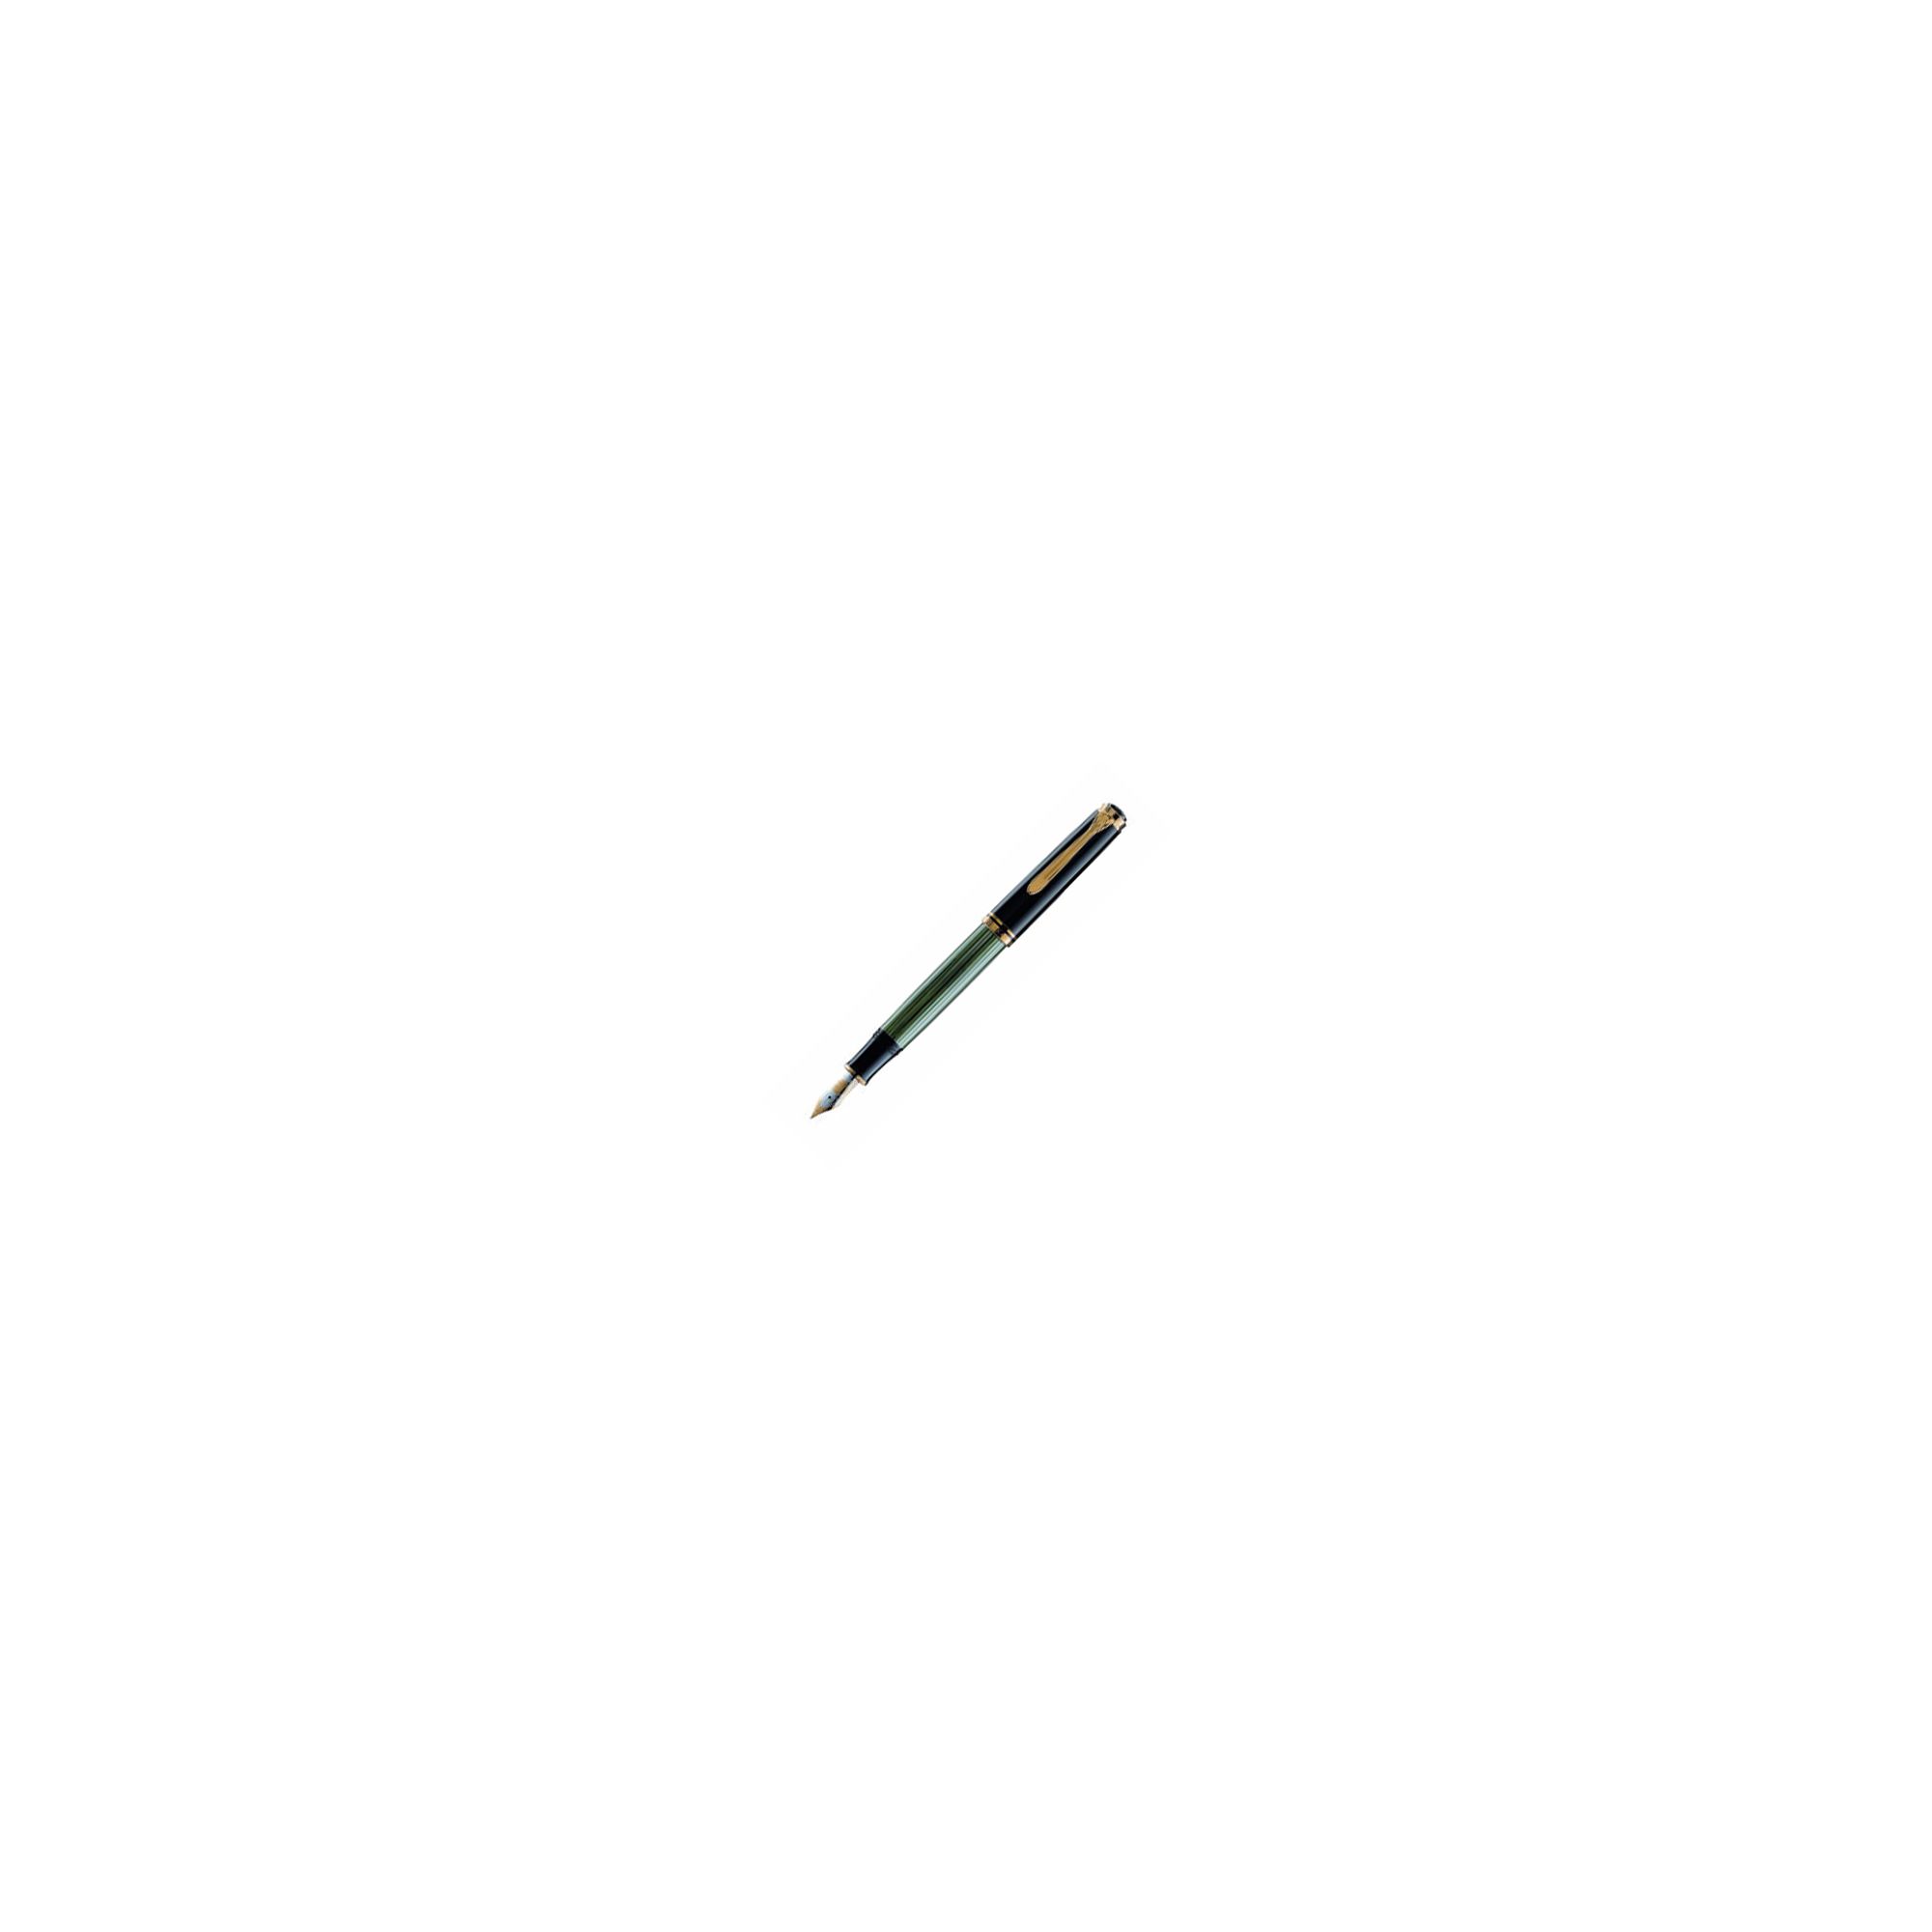 Pelikan SouverÃ¤n M1000 Black/Green Fountain pen at Tesco Direct